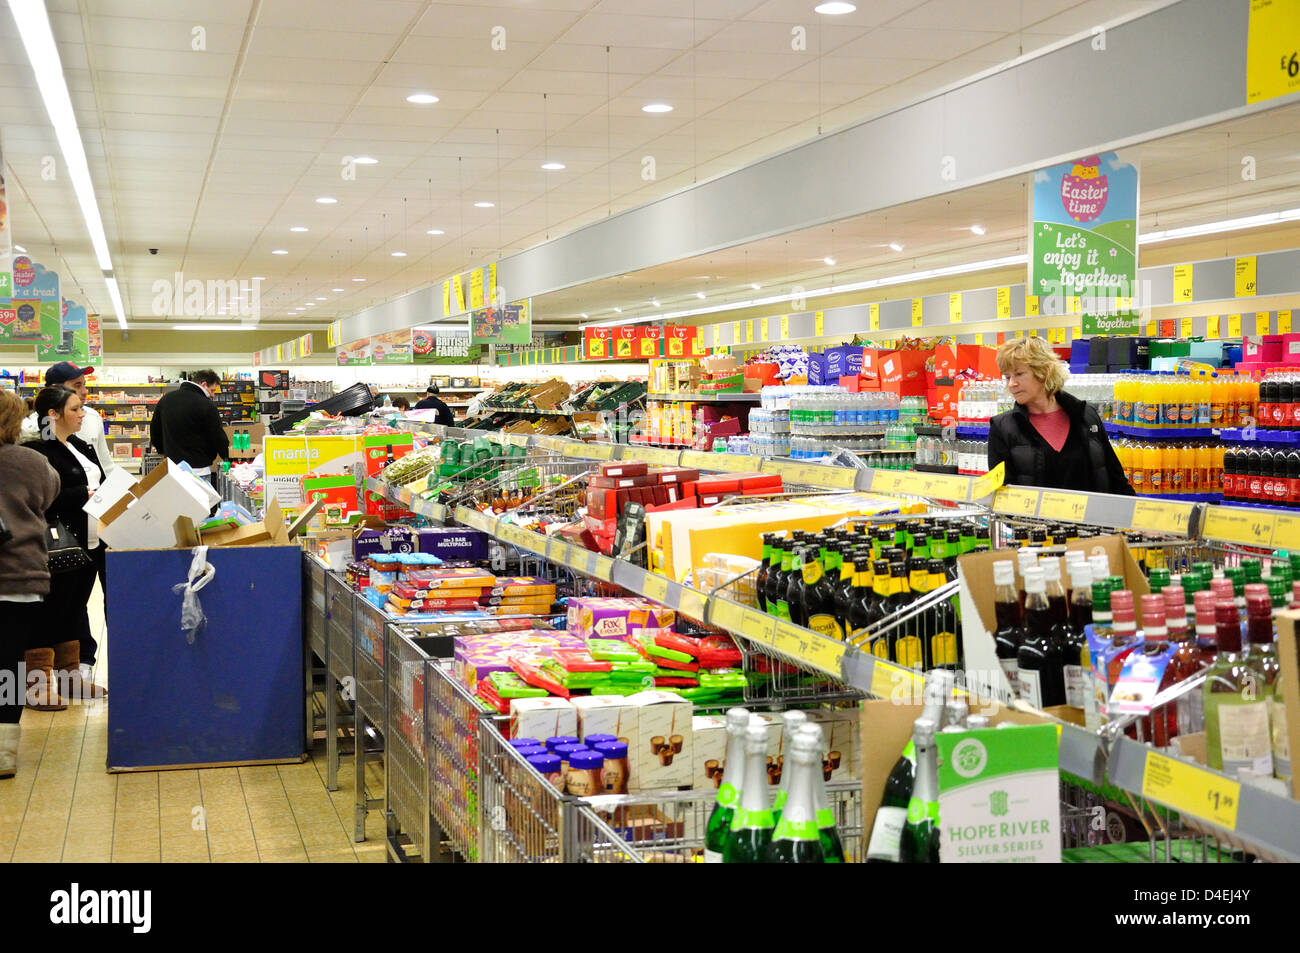 Interior of Aldi supermarket, High Street, Feltham, London Borough of Hounslow, Greater London, England, United Kingdom Stock Photo